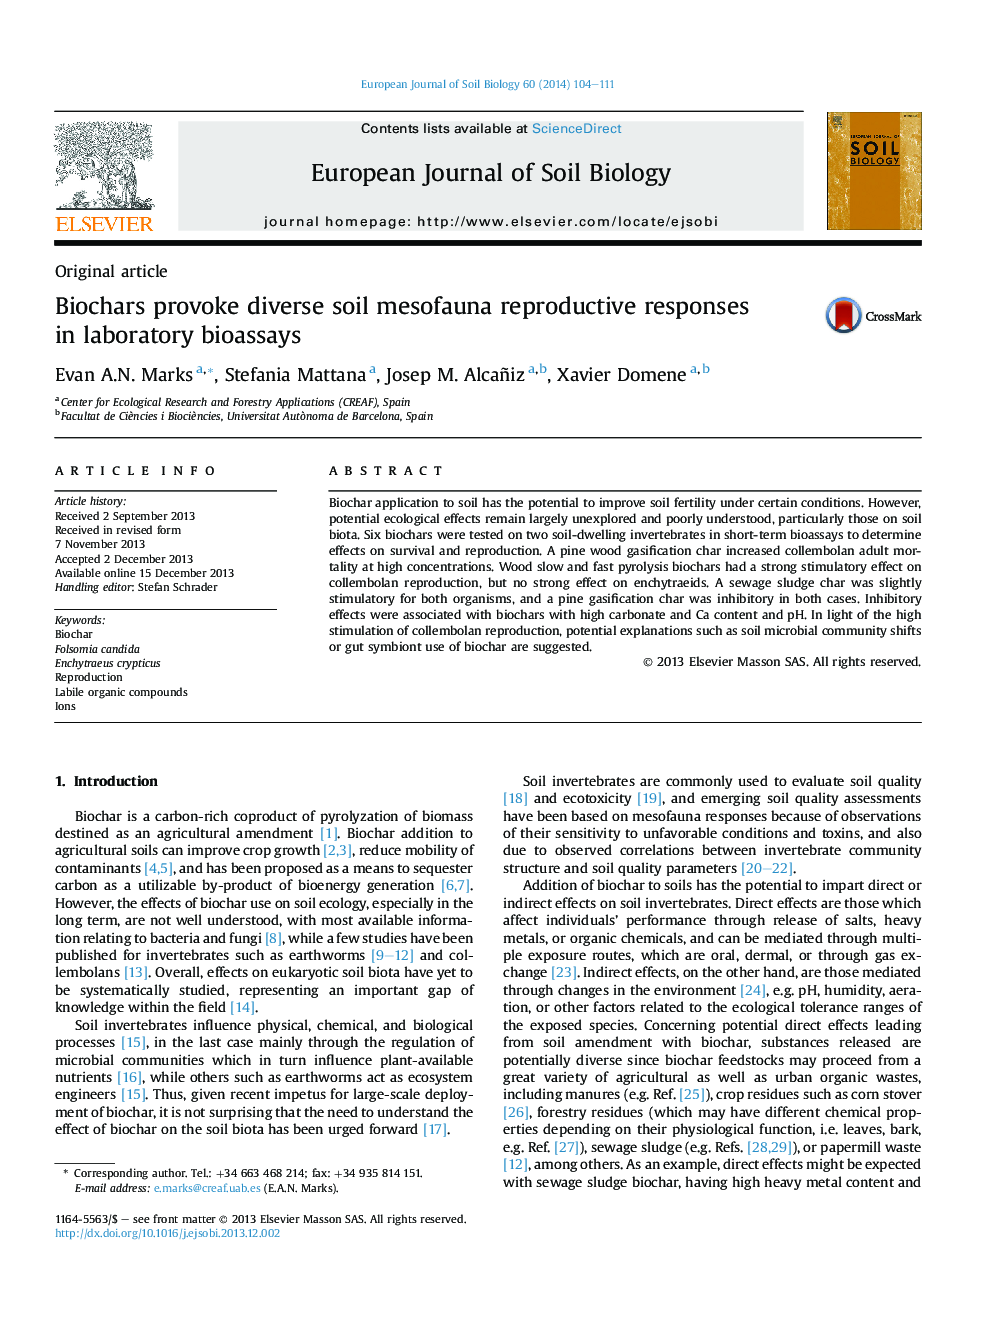 Biochars provoke diverse soil mesofauna reproductive responses in laboratory bioassays